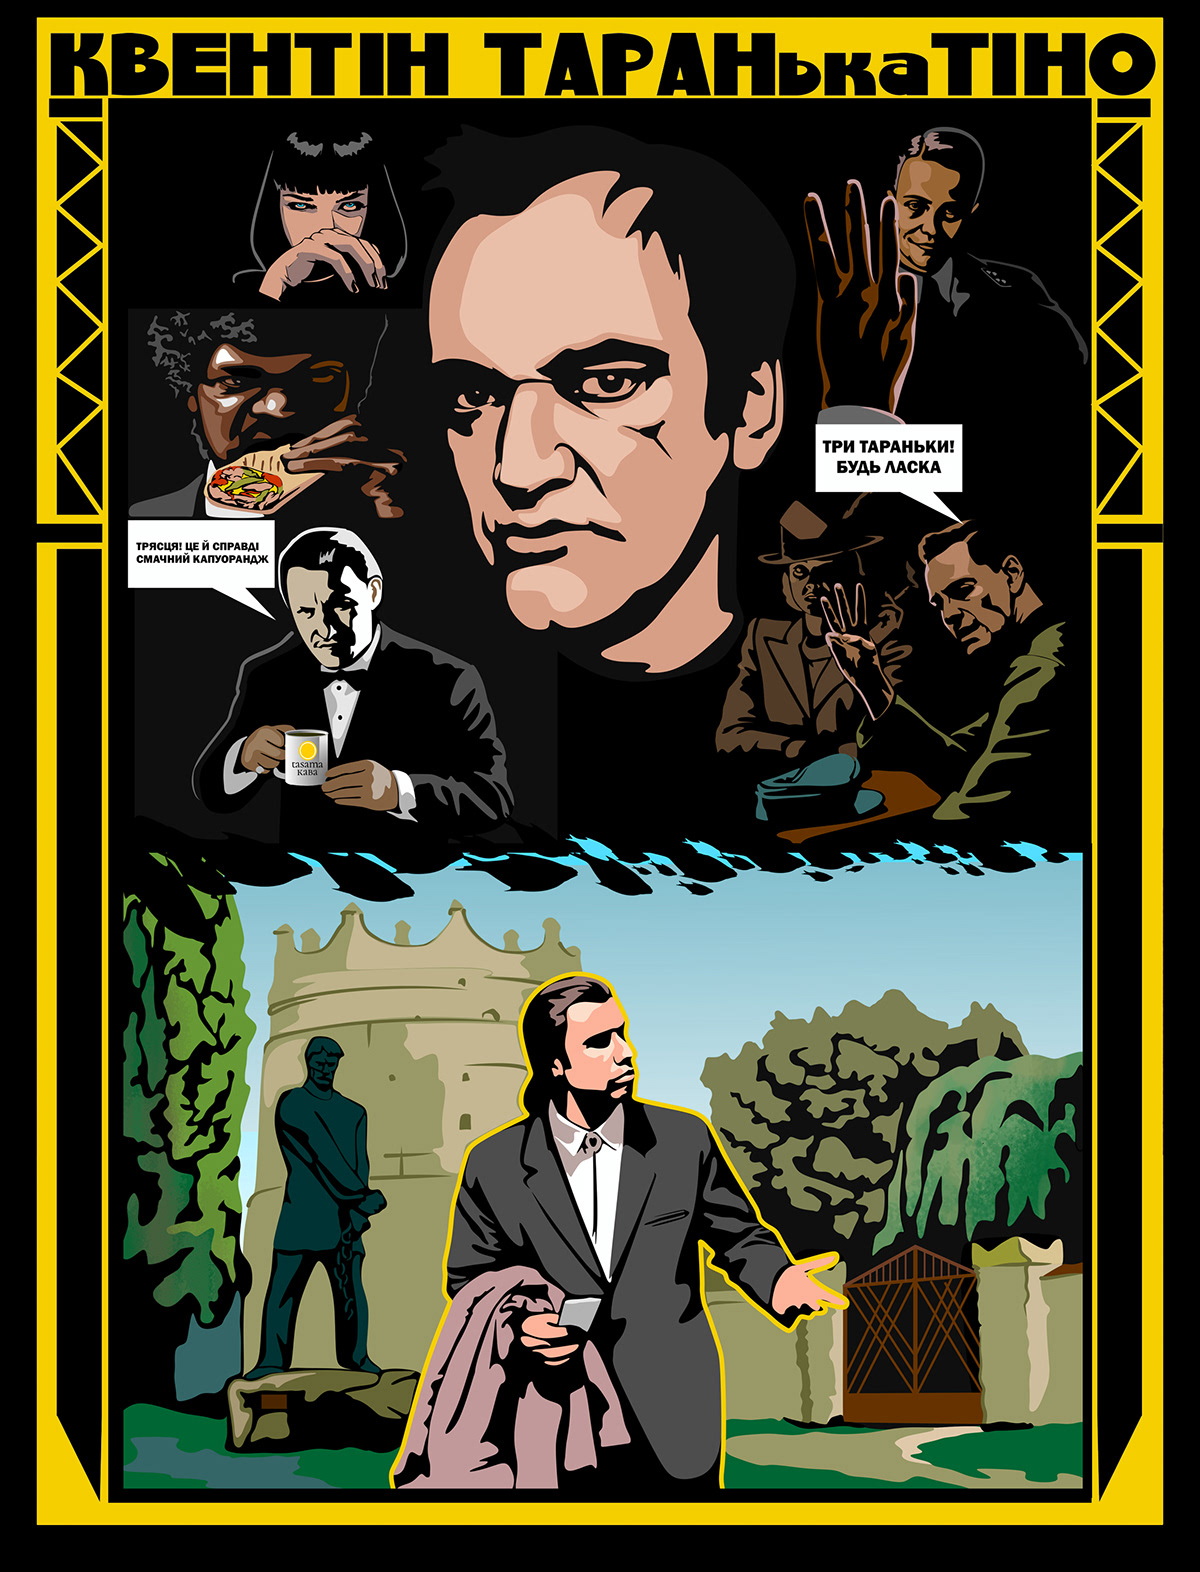 ukraine artwork art Drawing  Tarantino movie pulp fiction Quentin Tarantino movie poster ukraineart